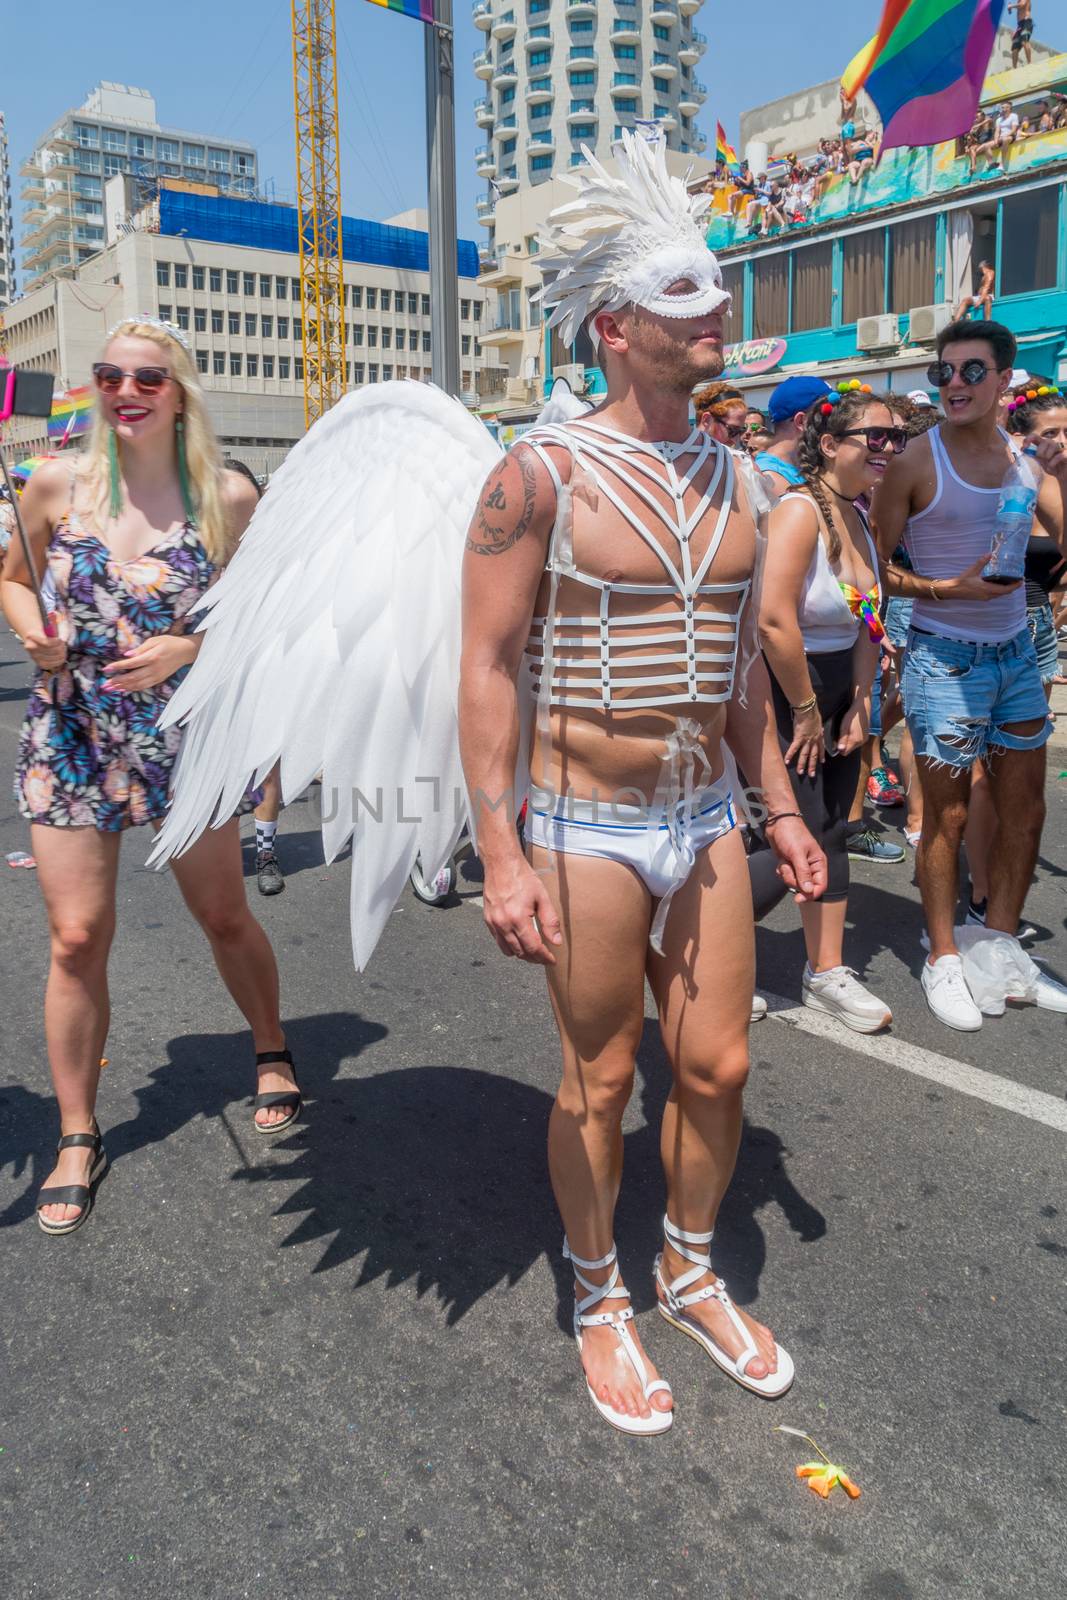 Tel-Aviv 20th Pride Parade, 2018 by RnDmS